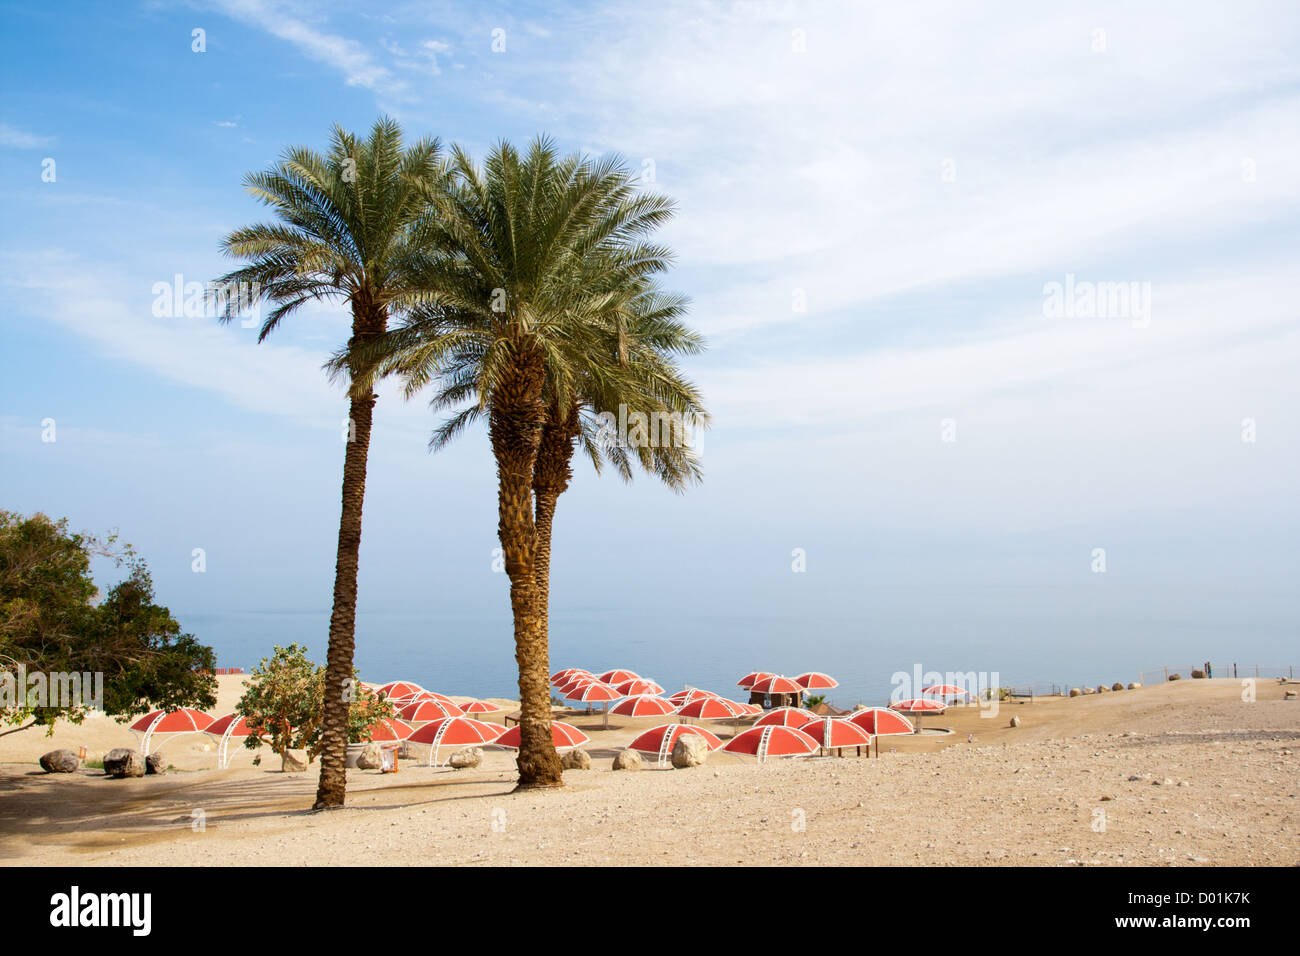 Ein Gedi oase at the Dead Sea. Israel Stock Photo